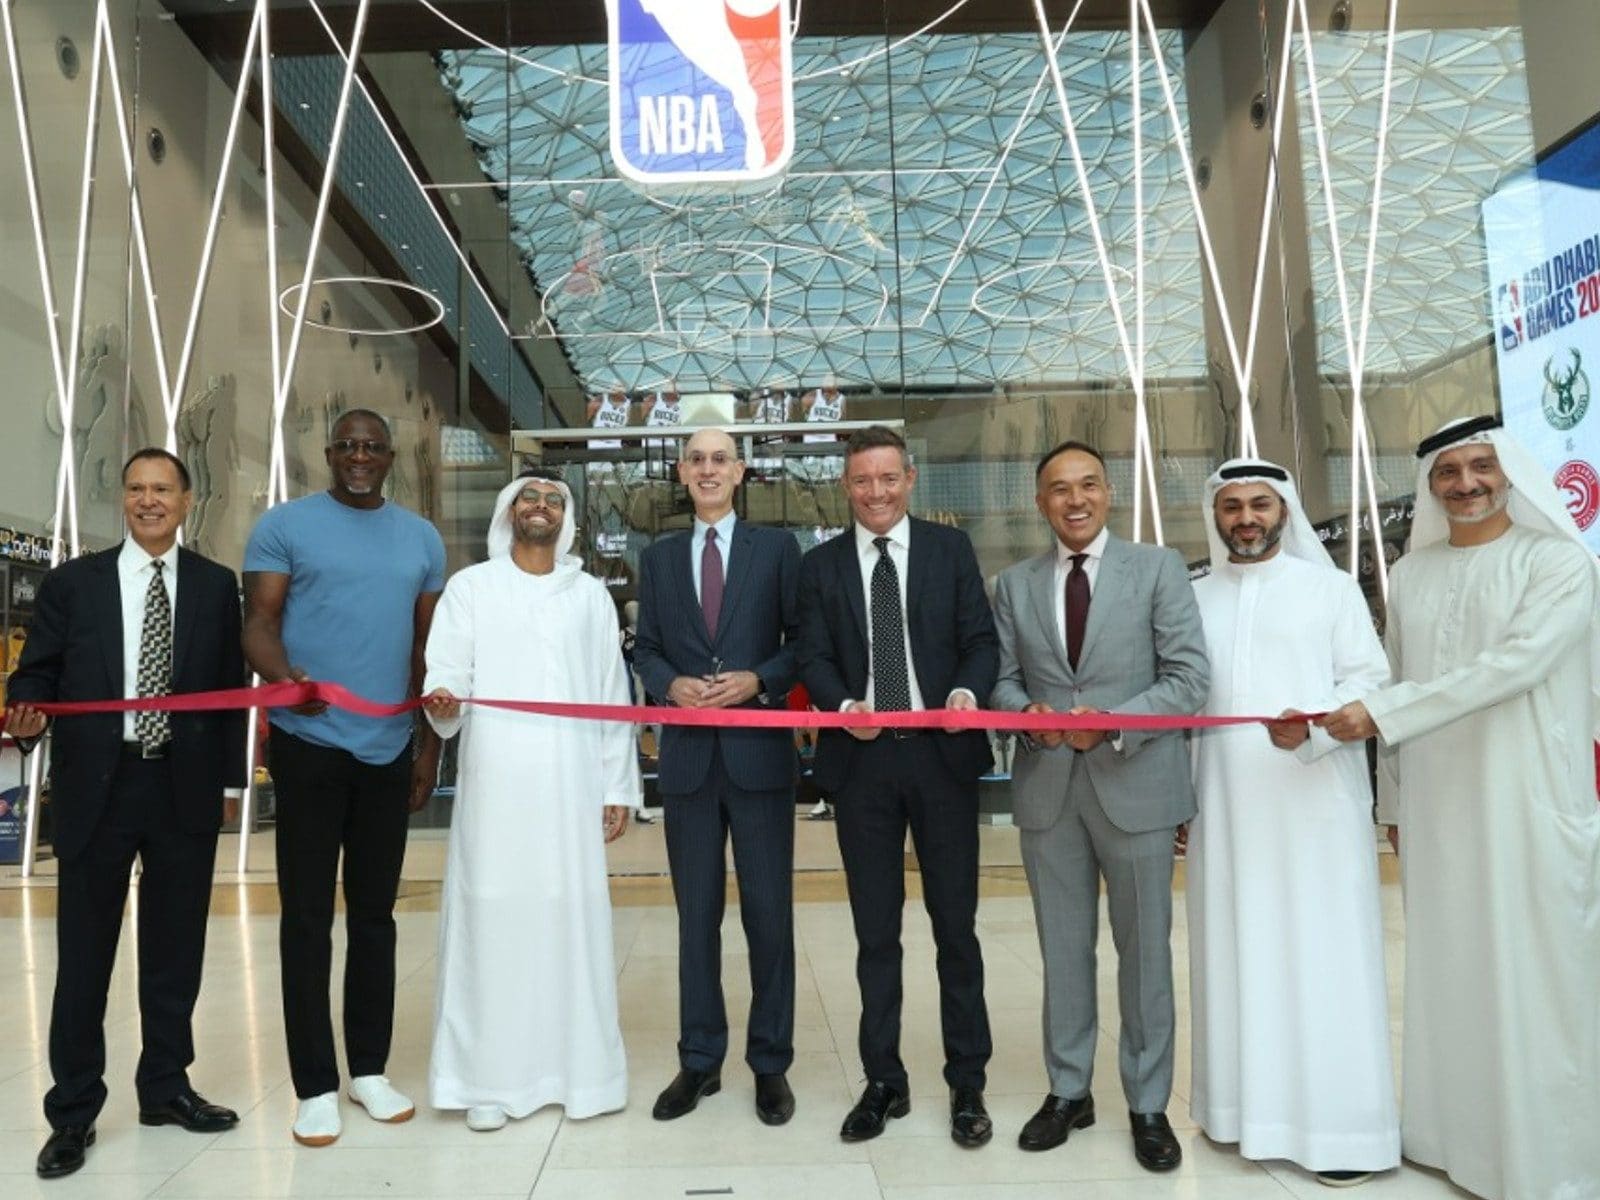 UAE's first NBA Store opens in Abu Dhabi - News